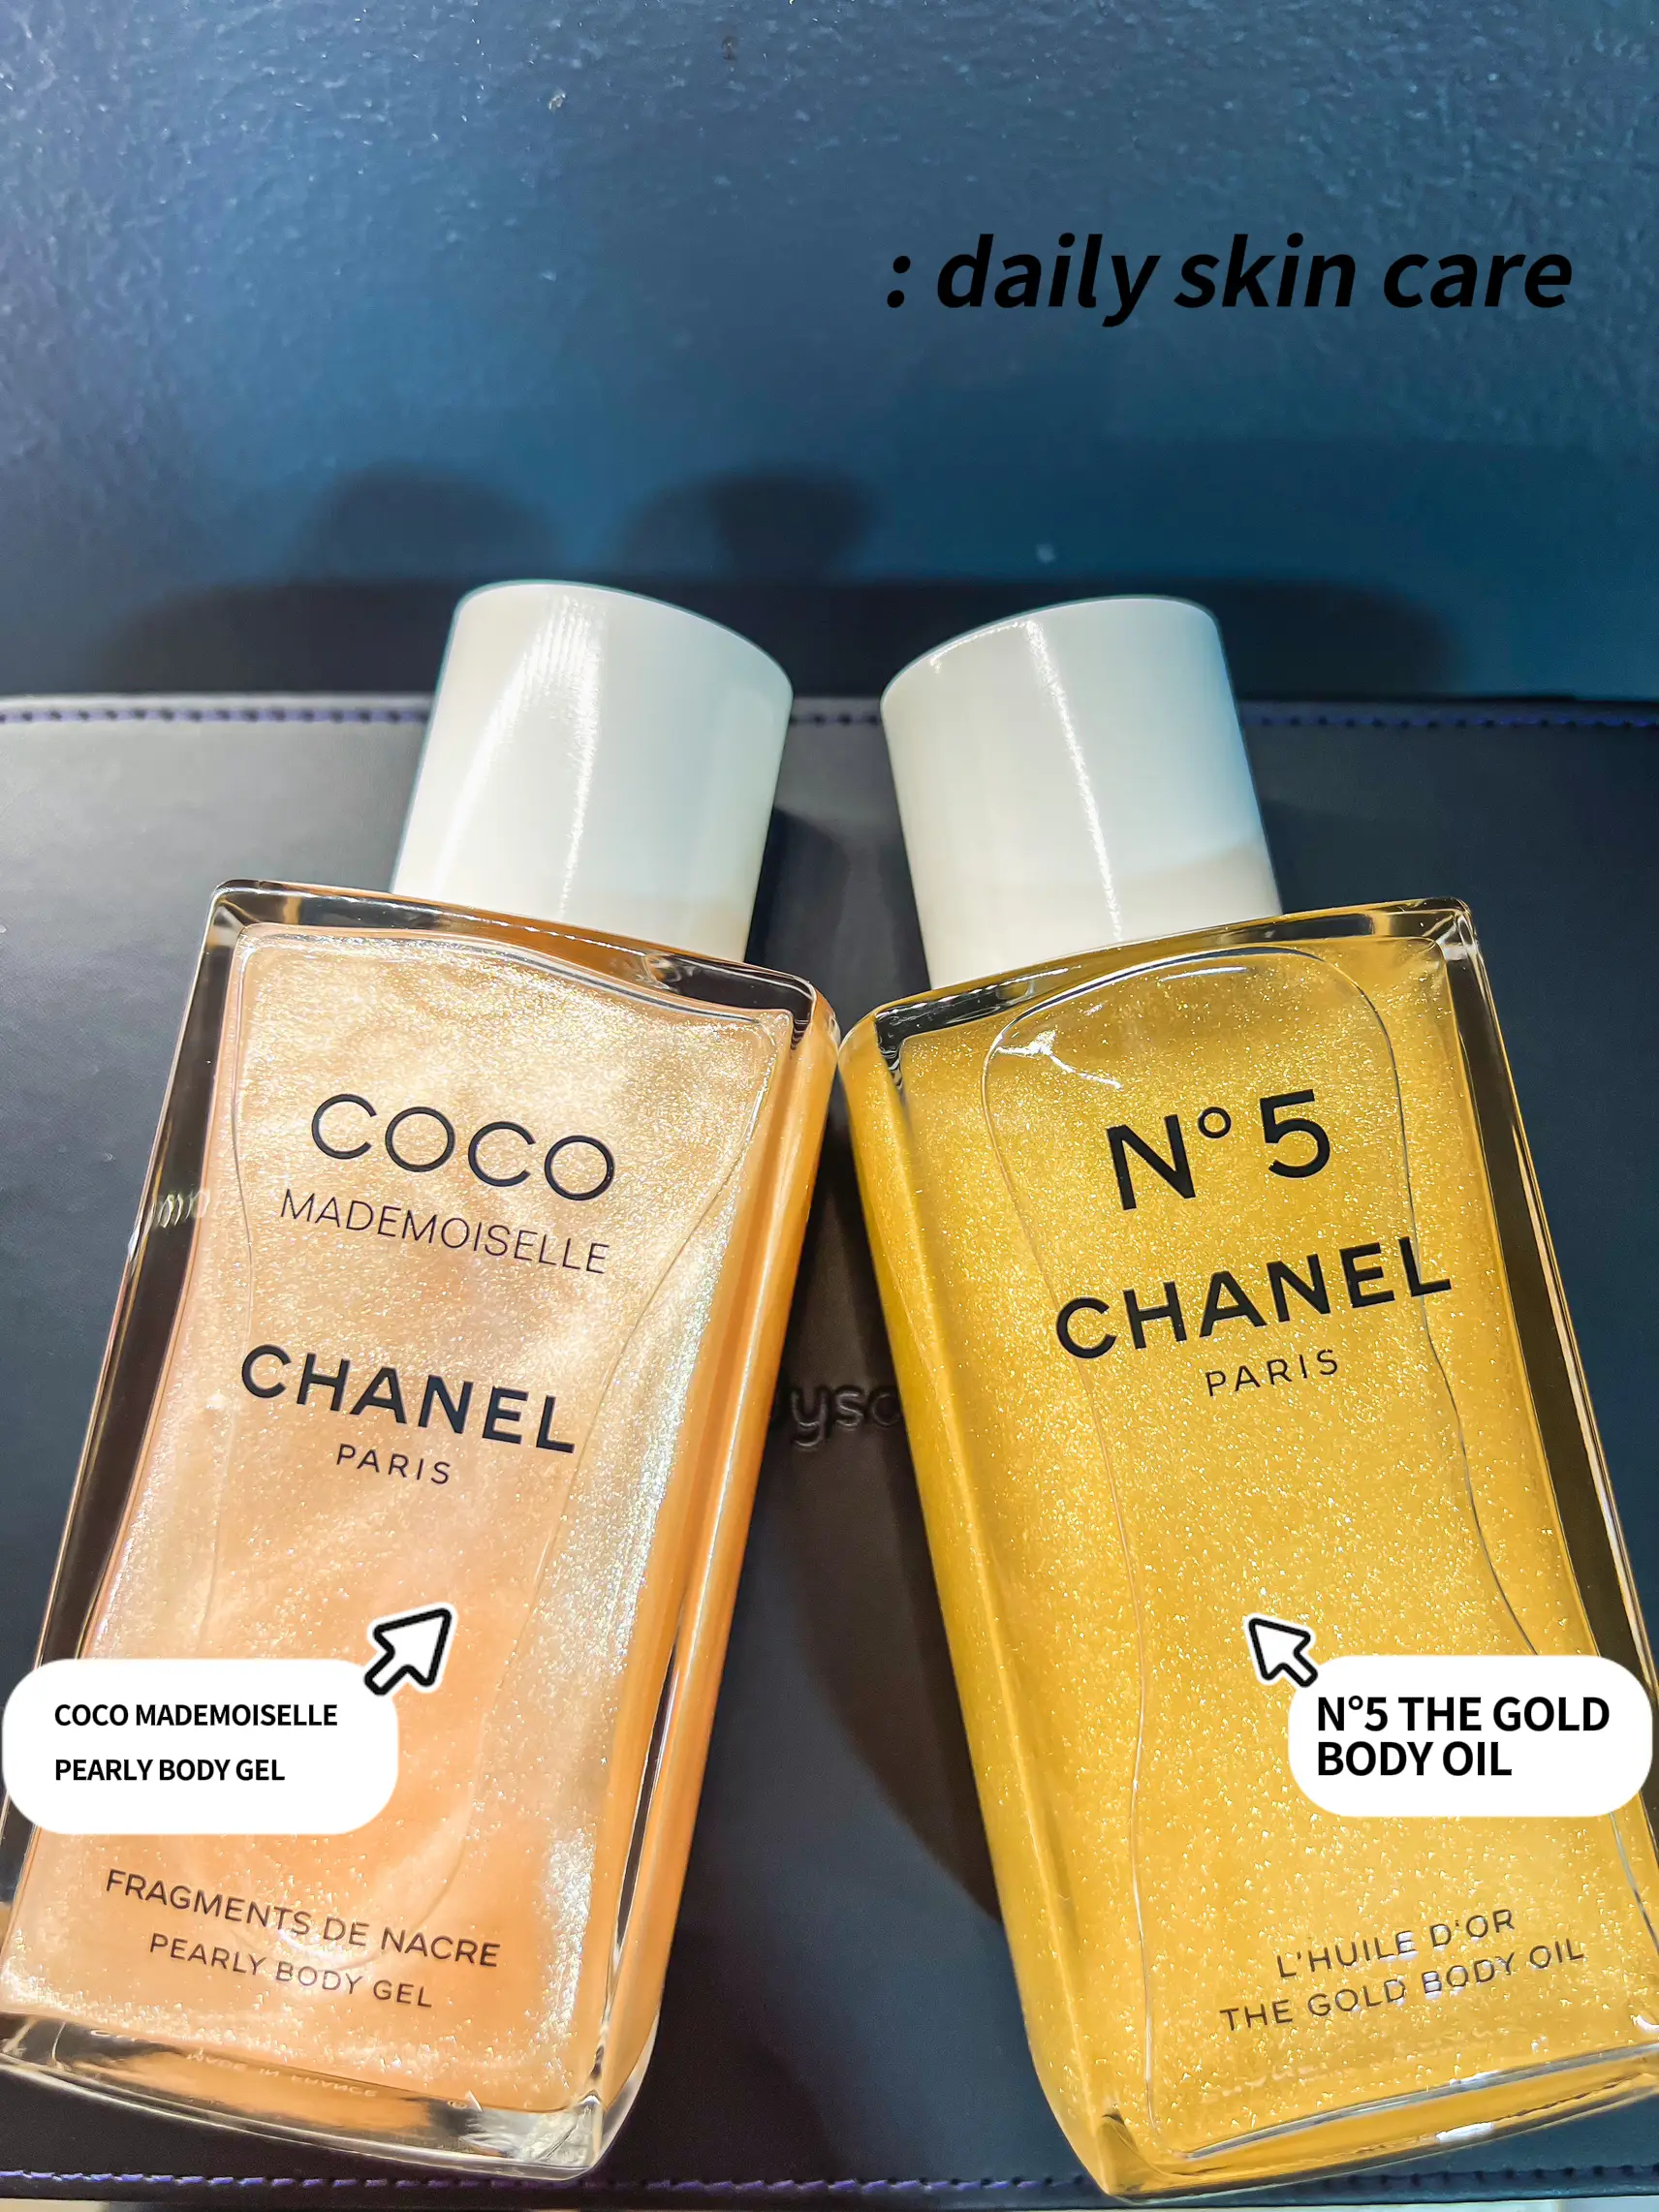 chanel 5 gold body oil